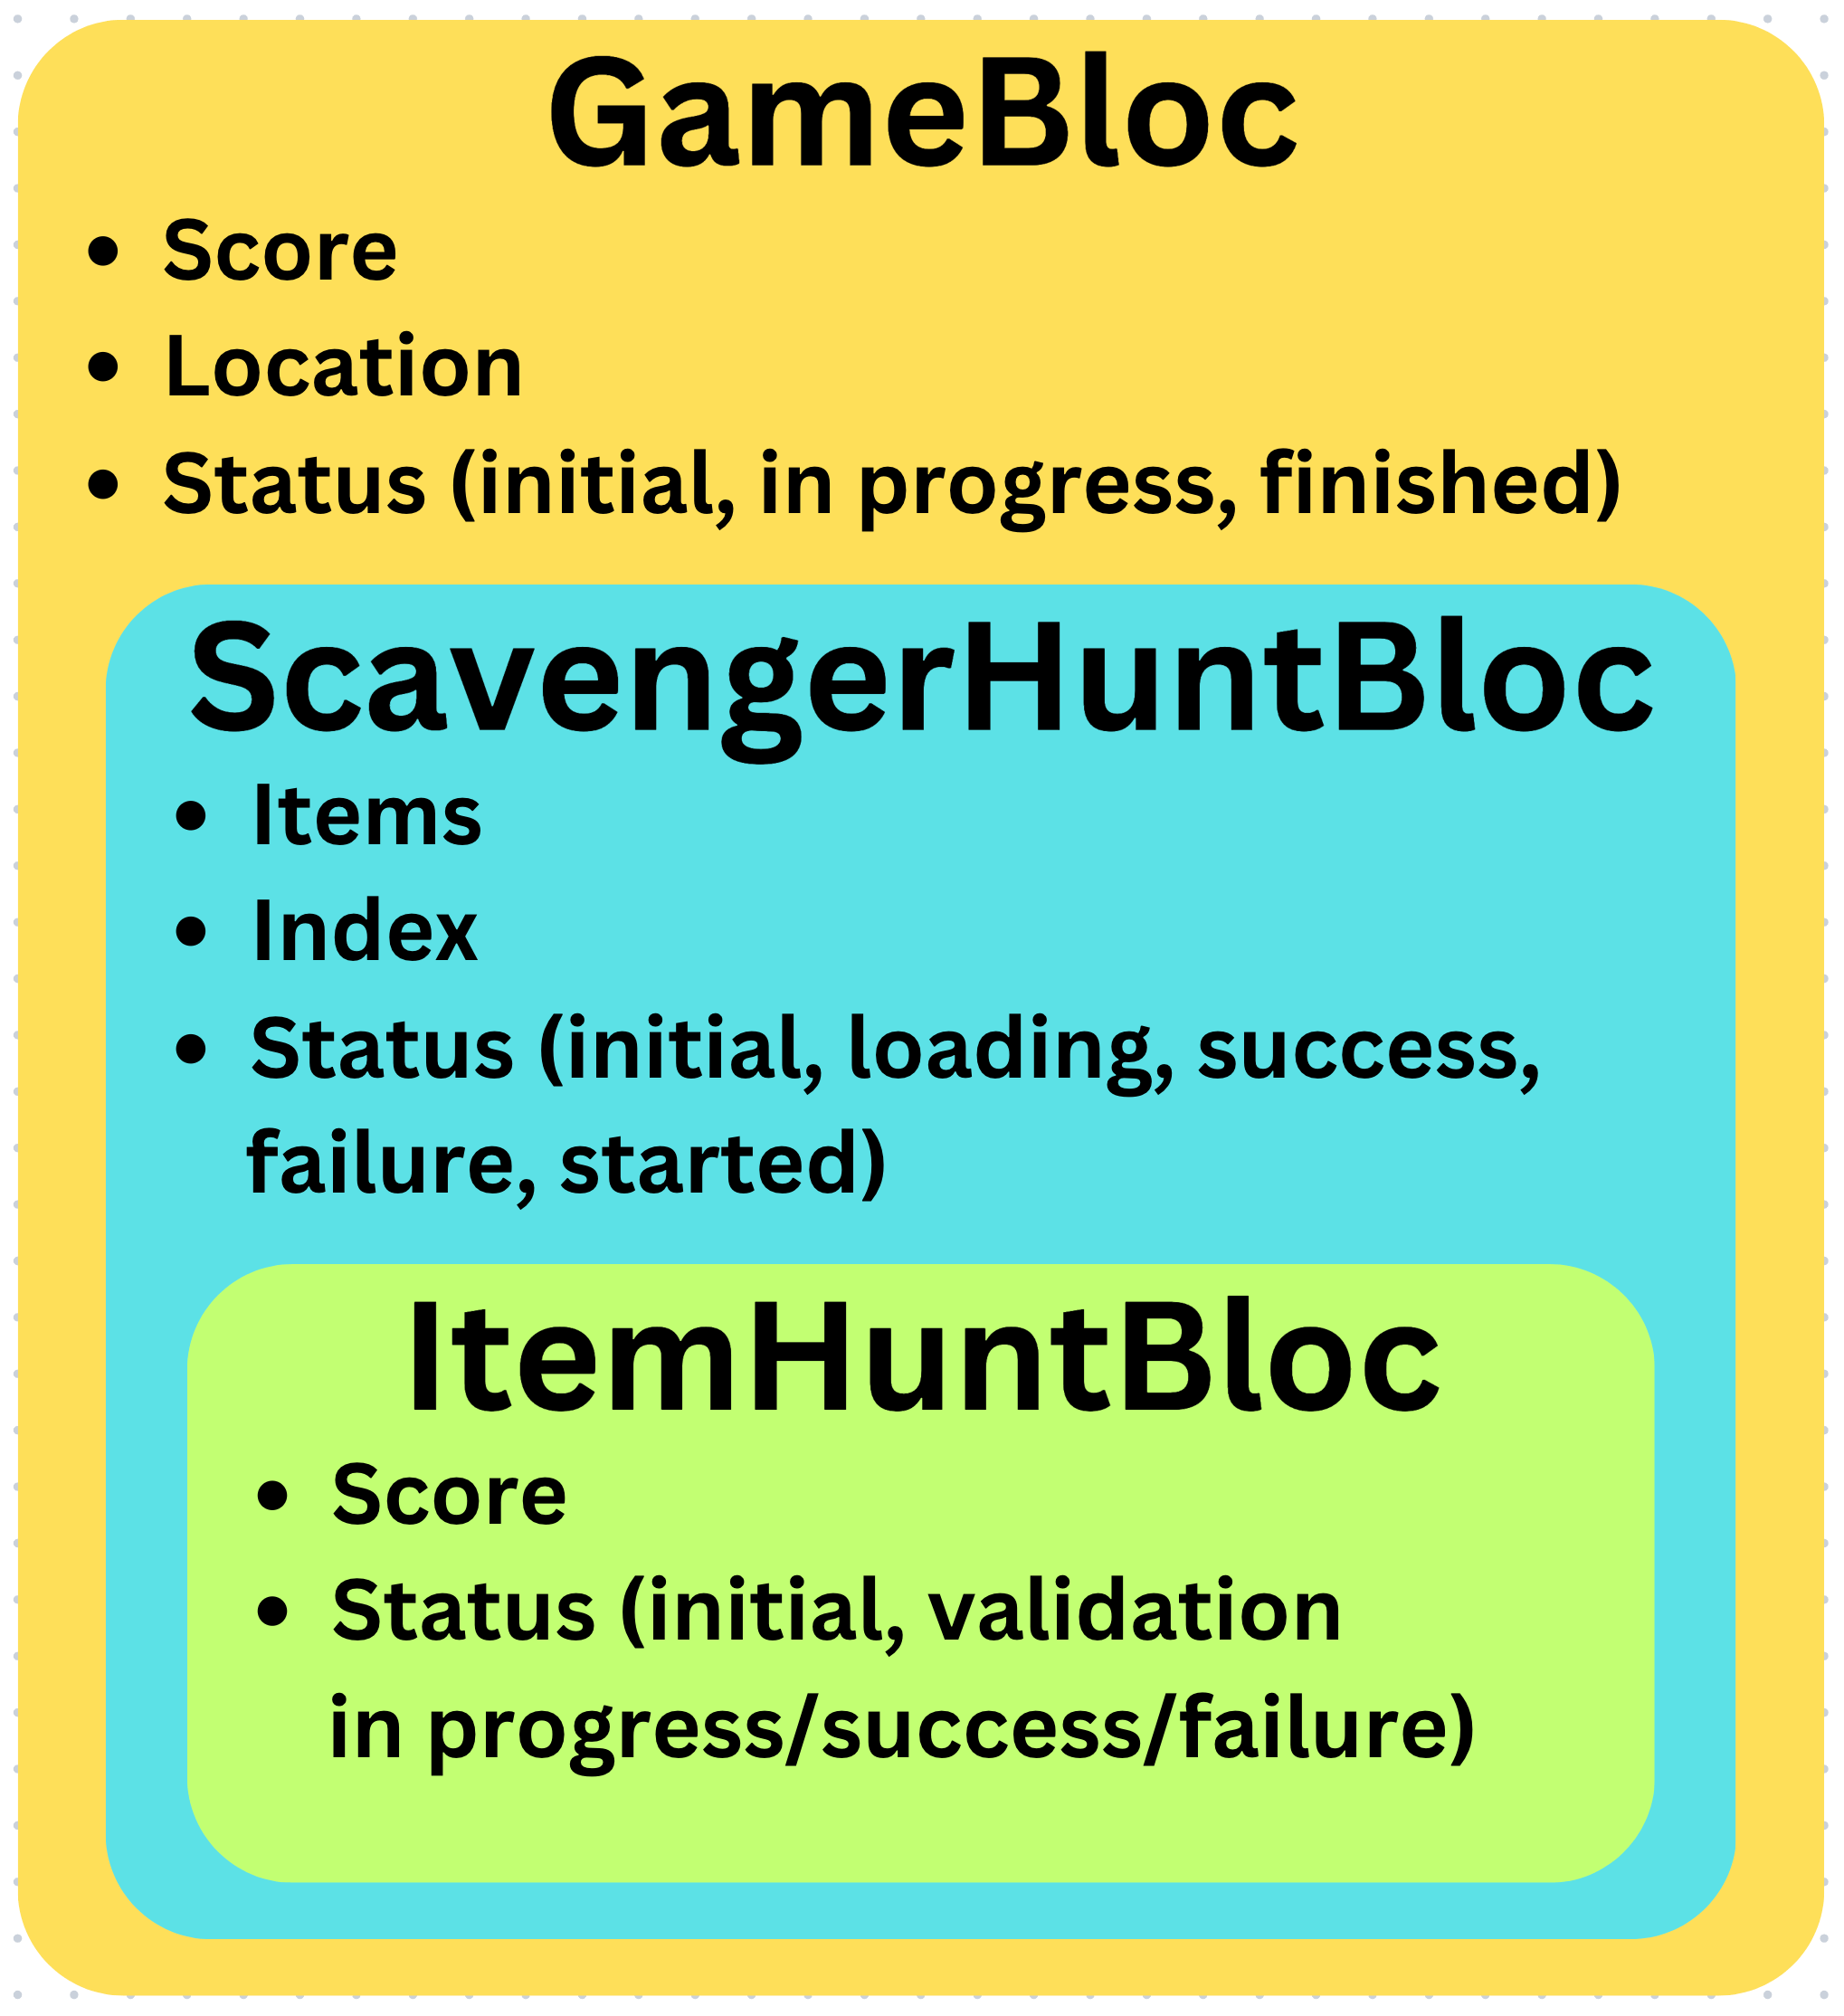 BLoC structure in the app